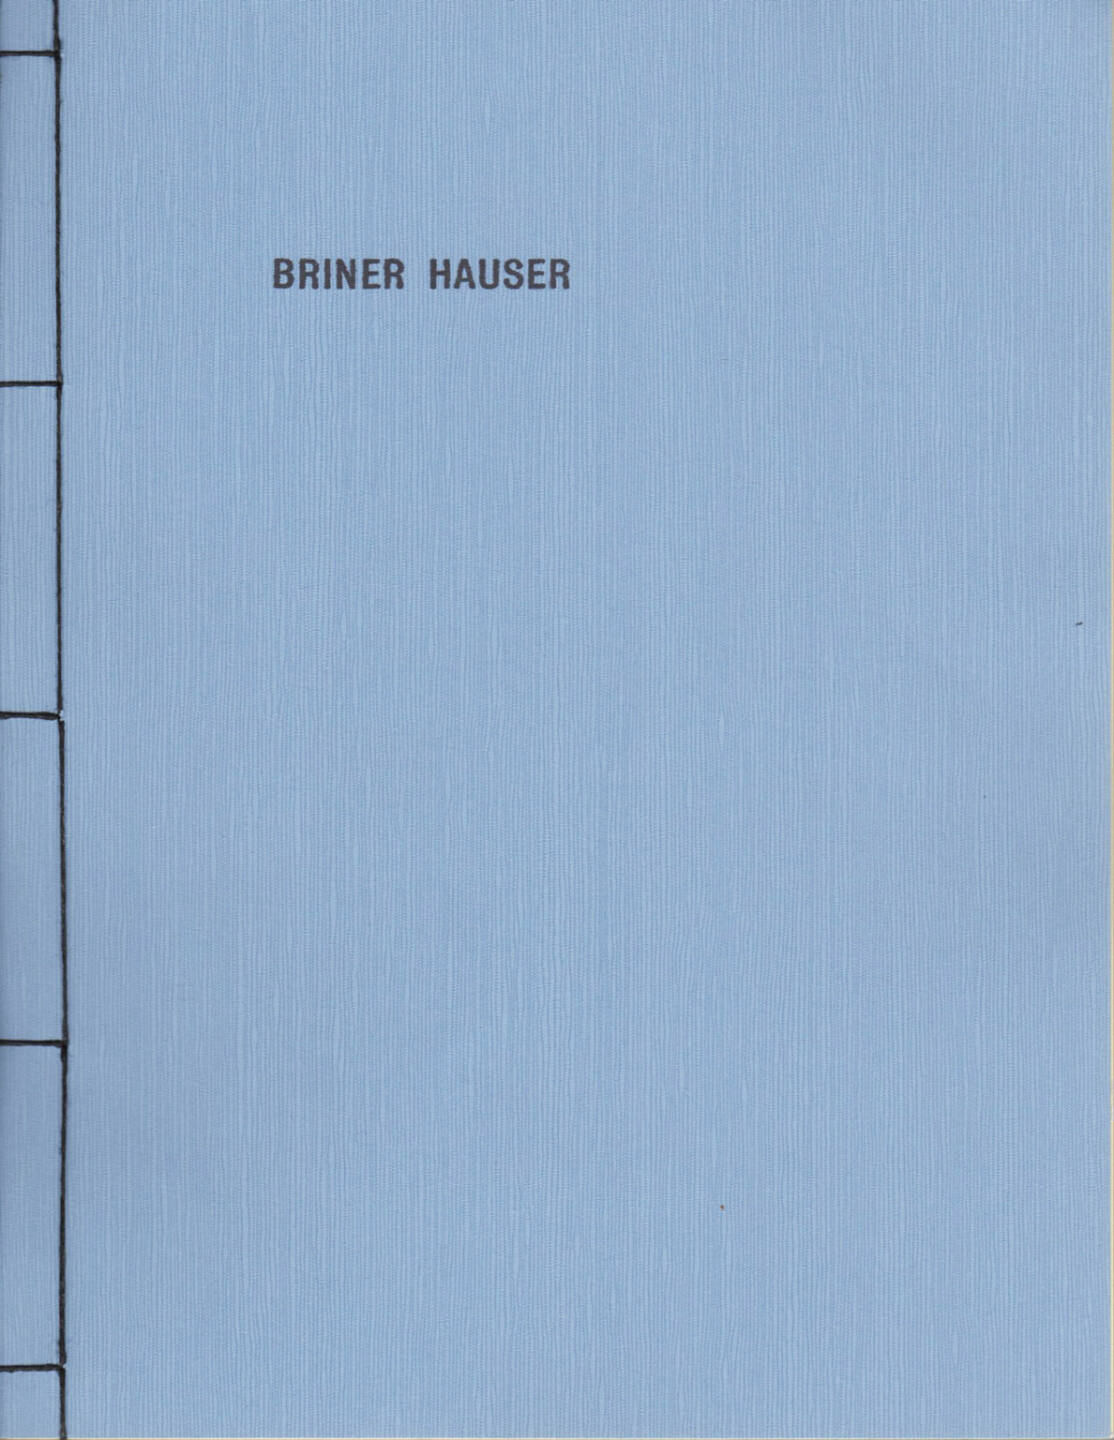 Timothy Briner & Thomas Hauser - BRINER HAUSER, S_U_N_ 2014, Cover - http://josefchladek.com/book/timothy_briner_thomas_hauser_-_briner_hauser